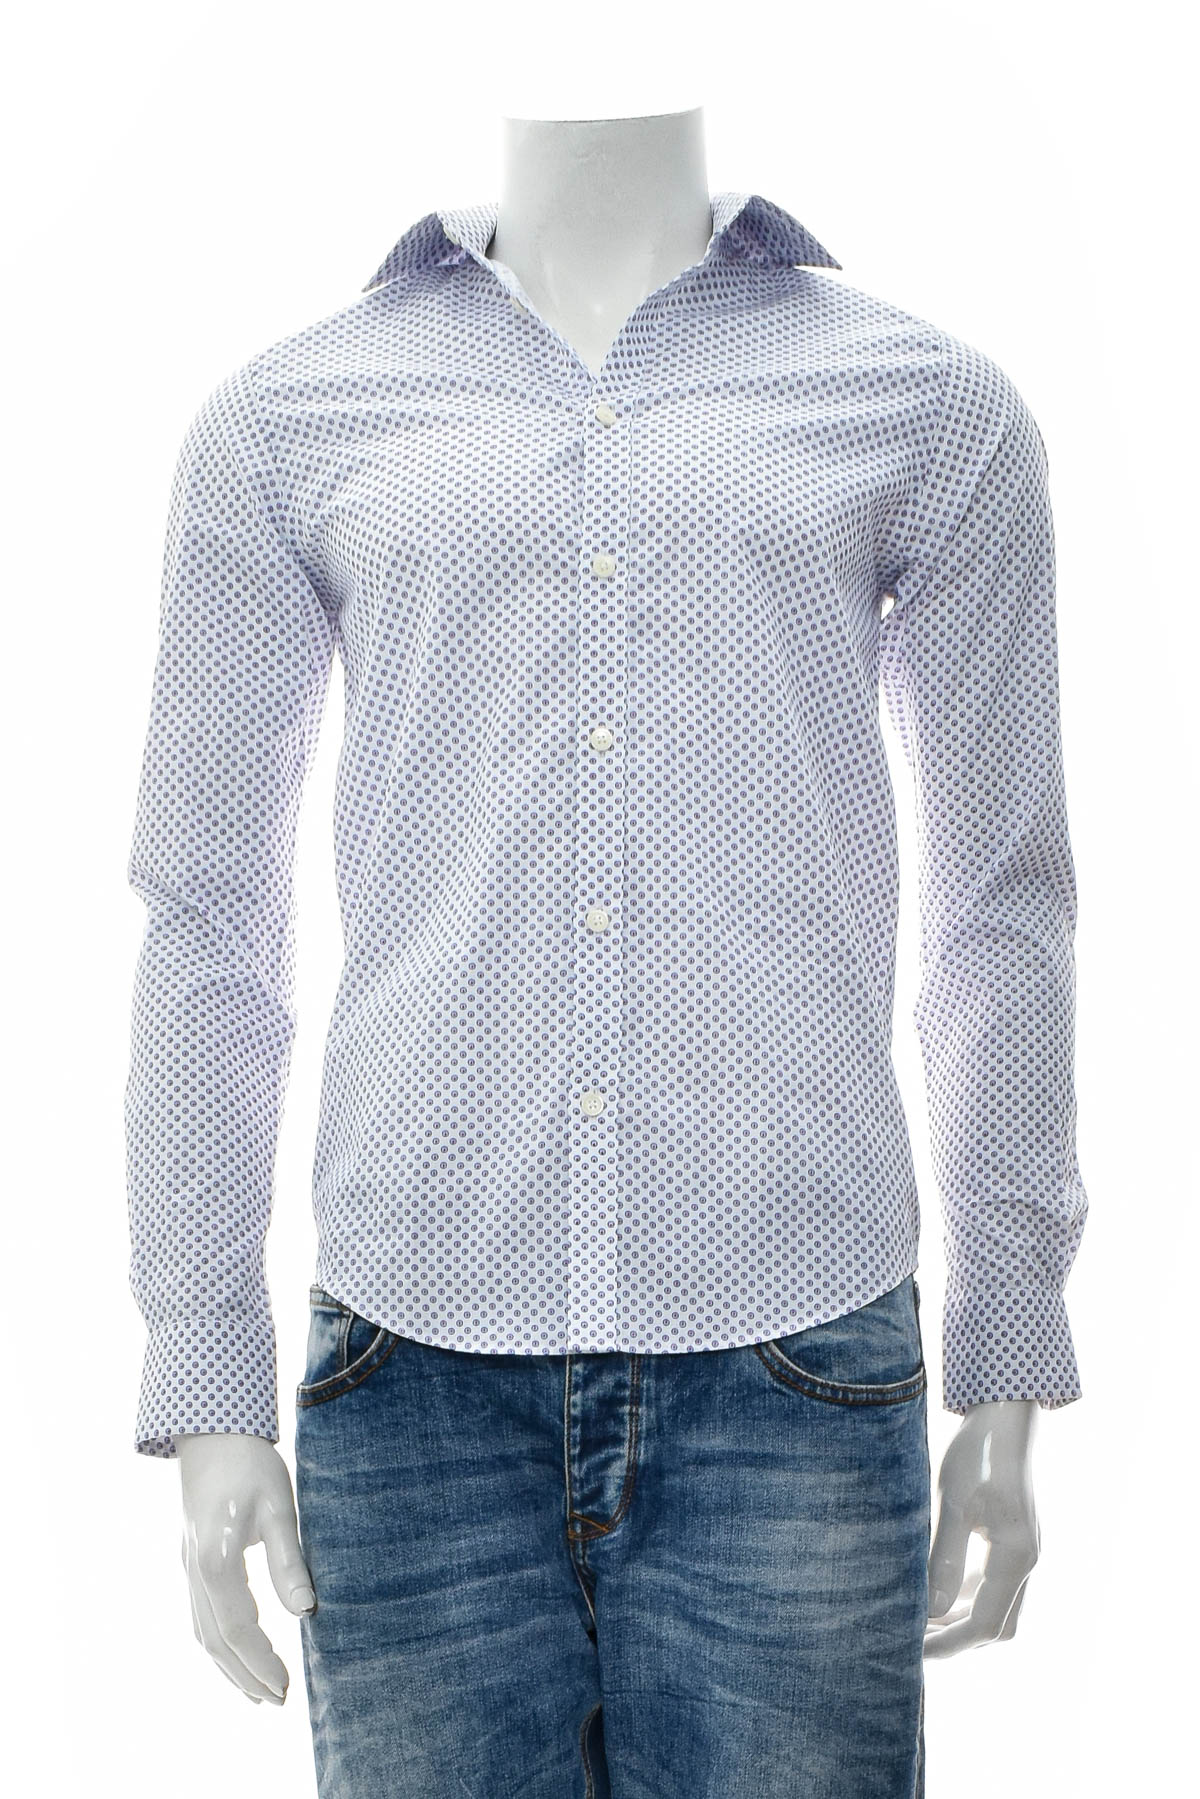 Men's shirt - ESPRIT - 0